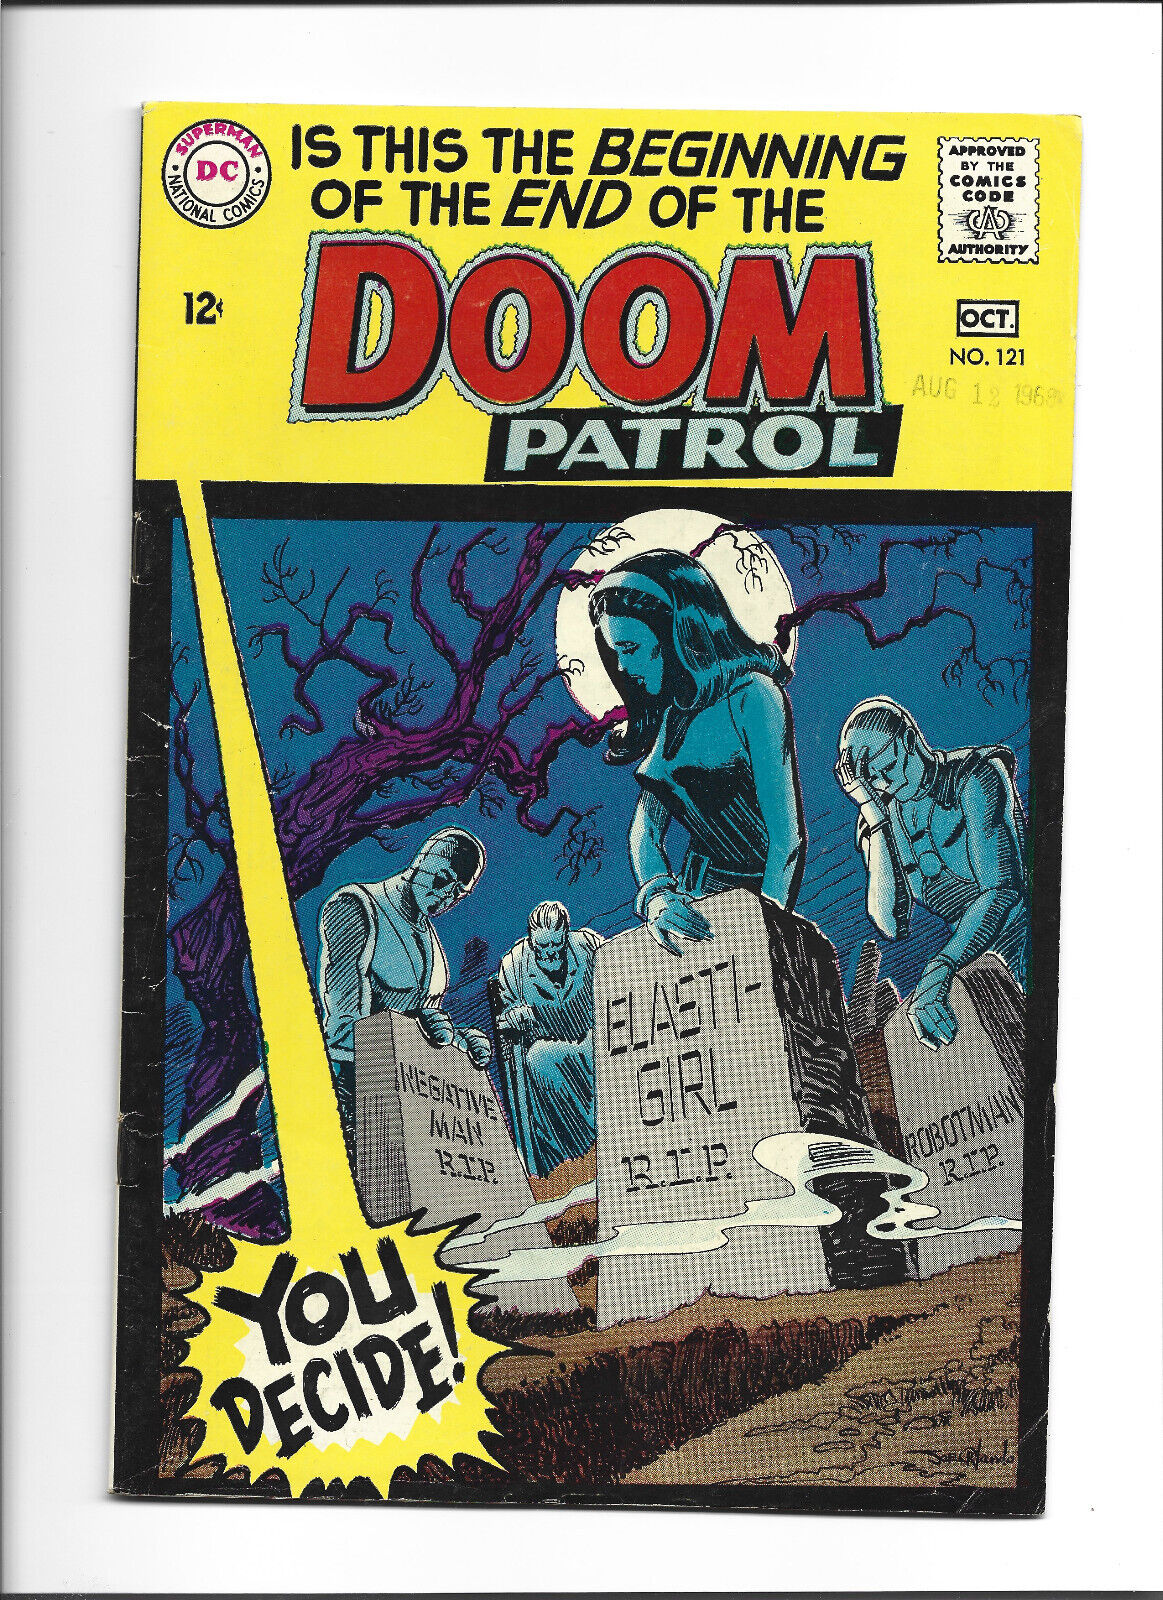 DOOM PATROL #121 (1968) Death of Doom Patrol, Final Silver Age Issue, Around FN-